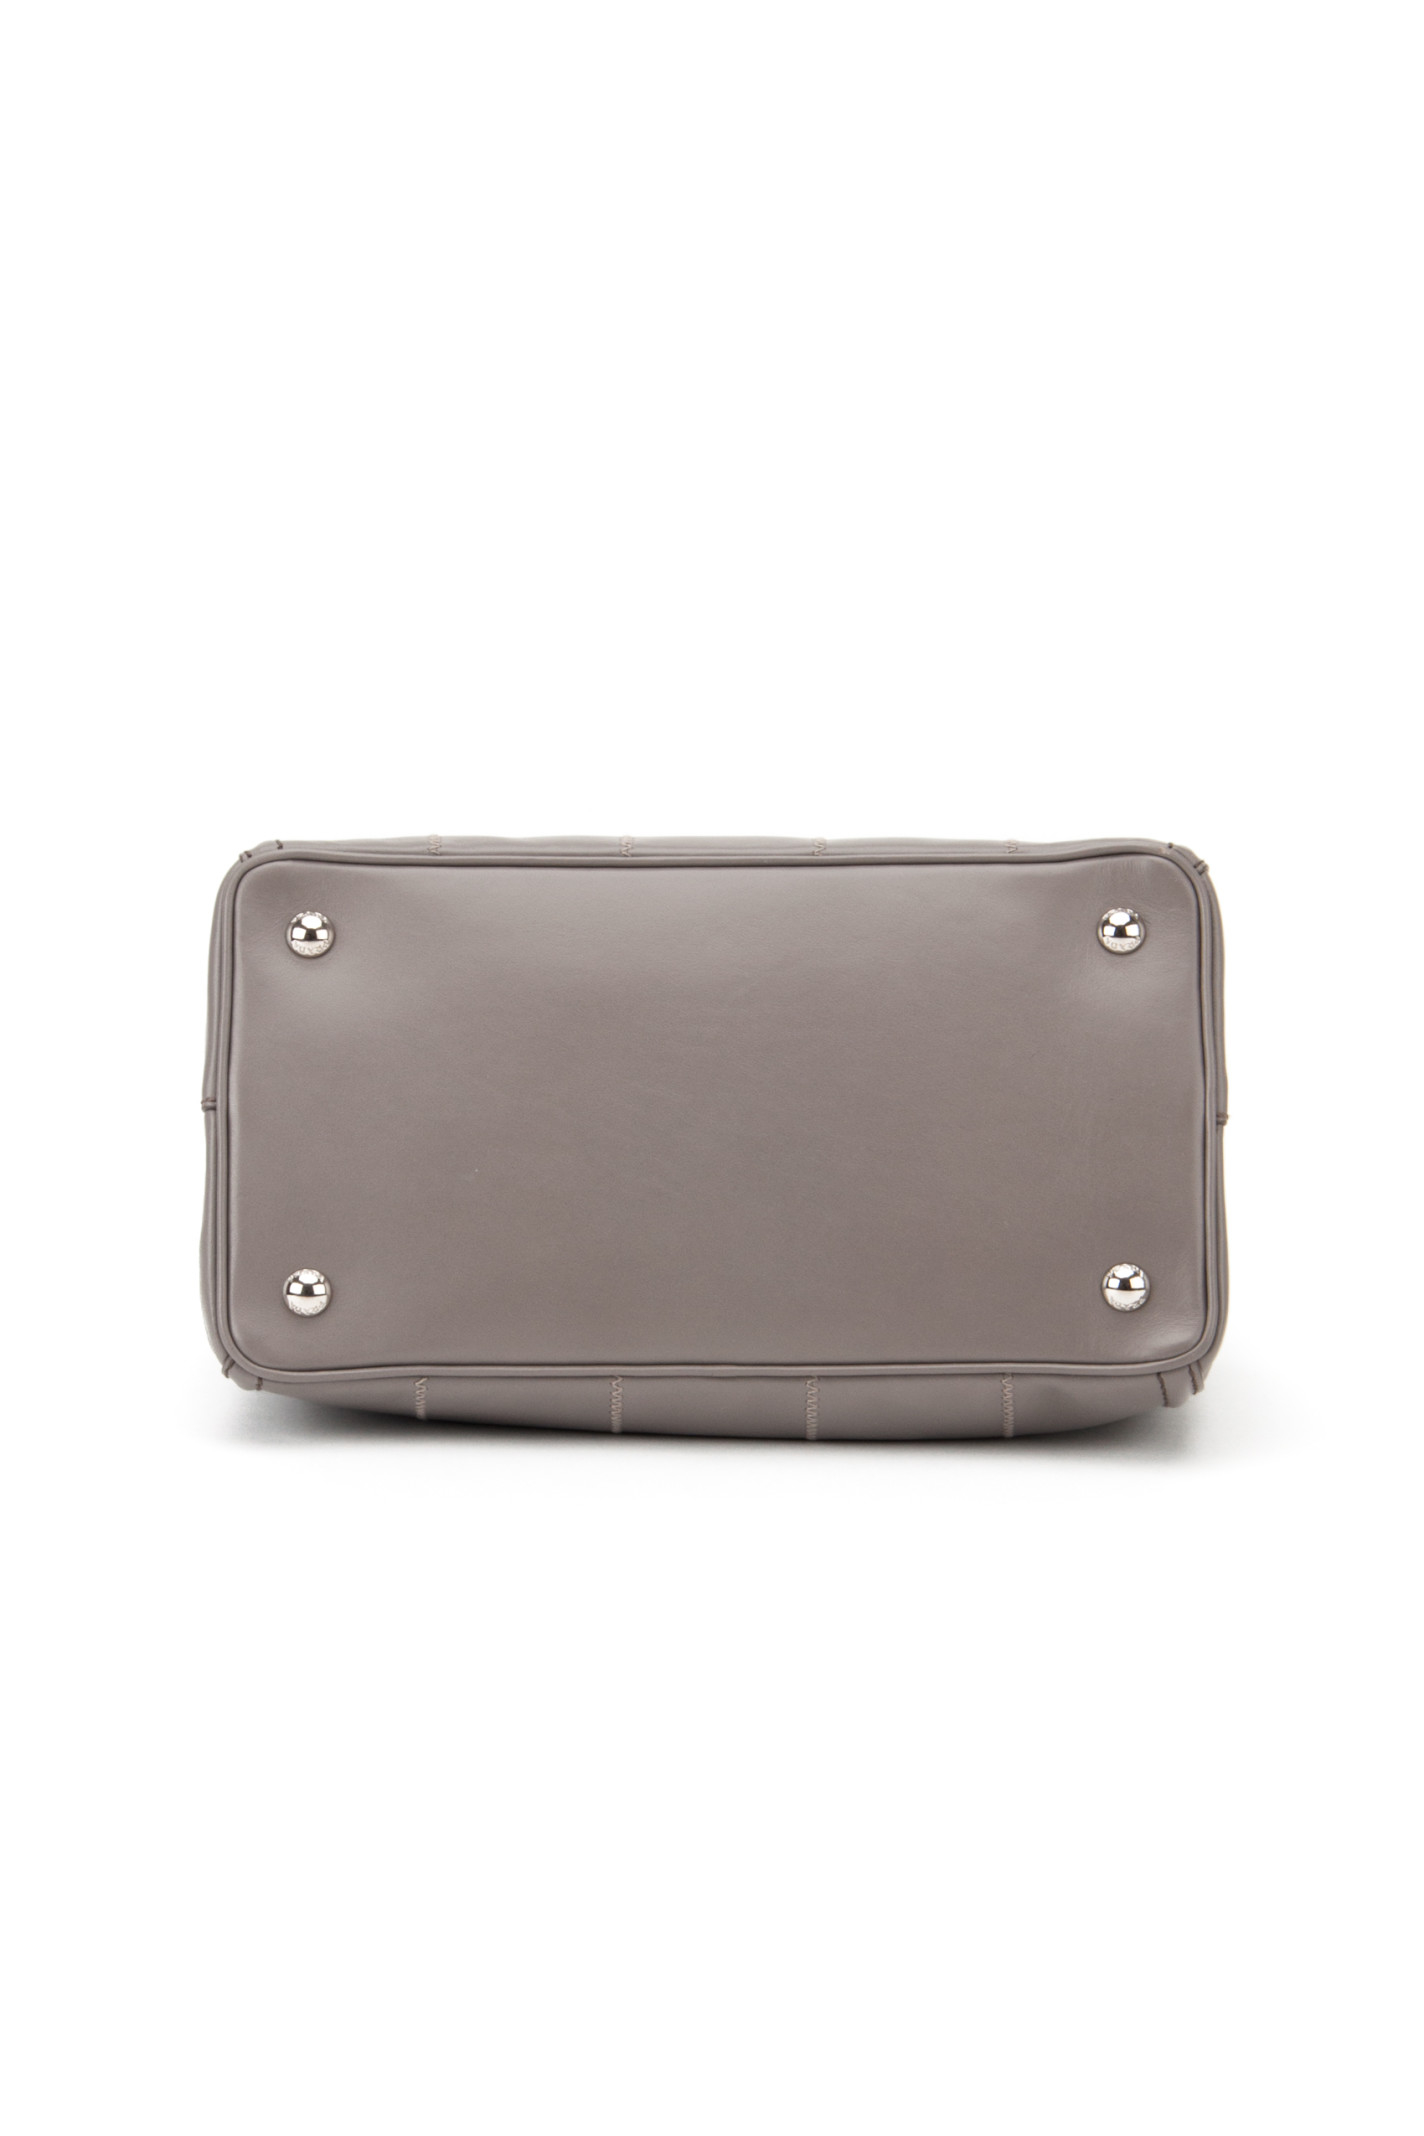 Prada Soft Calf Shopping Bag in Gray (ARGILLA) | Lyst  